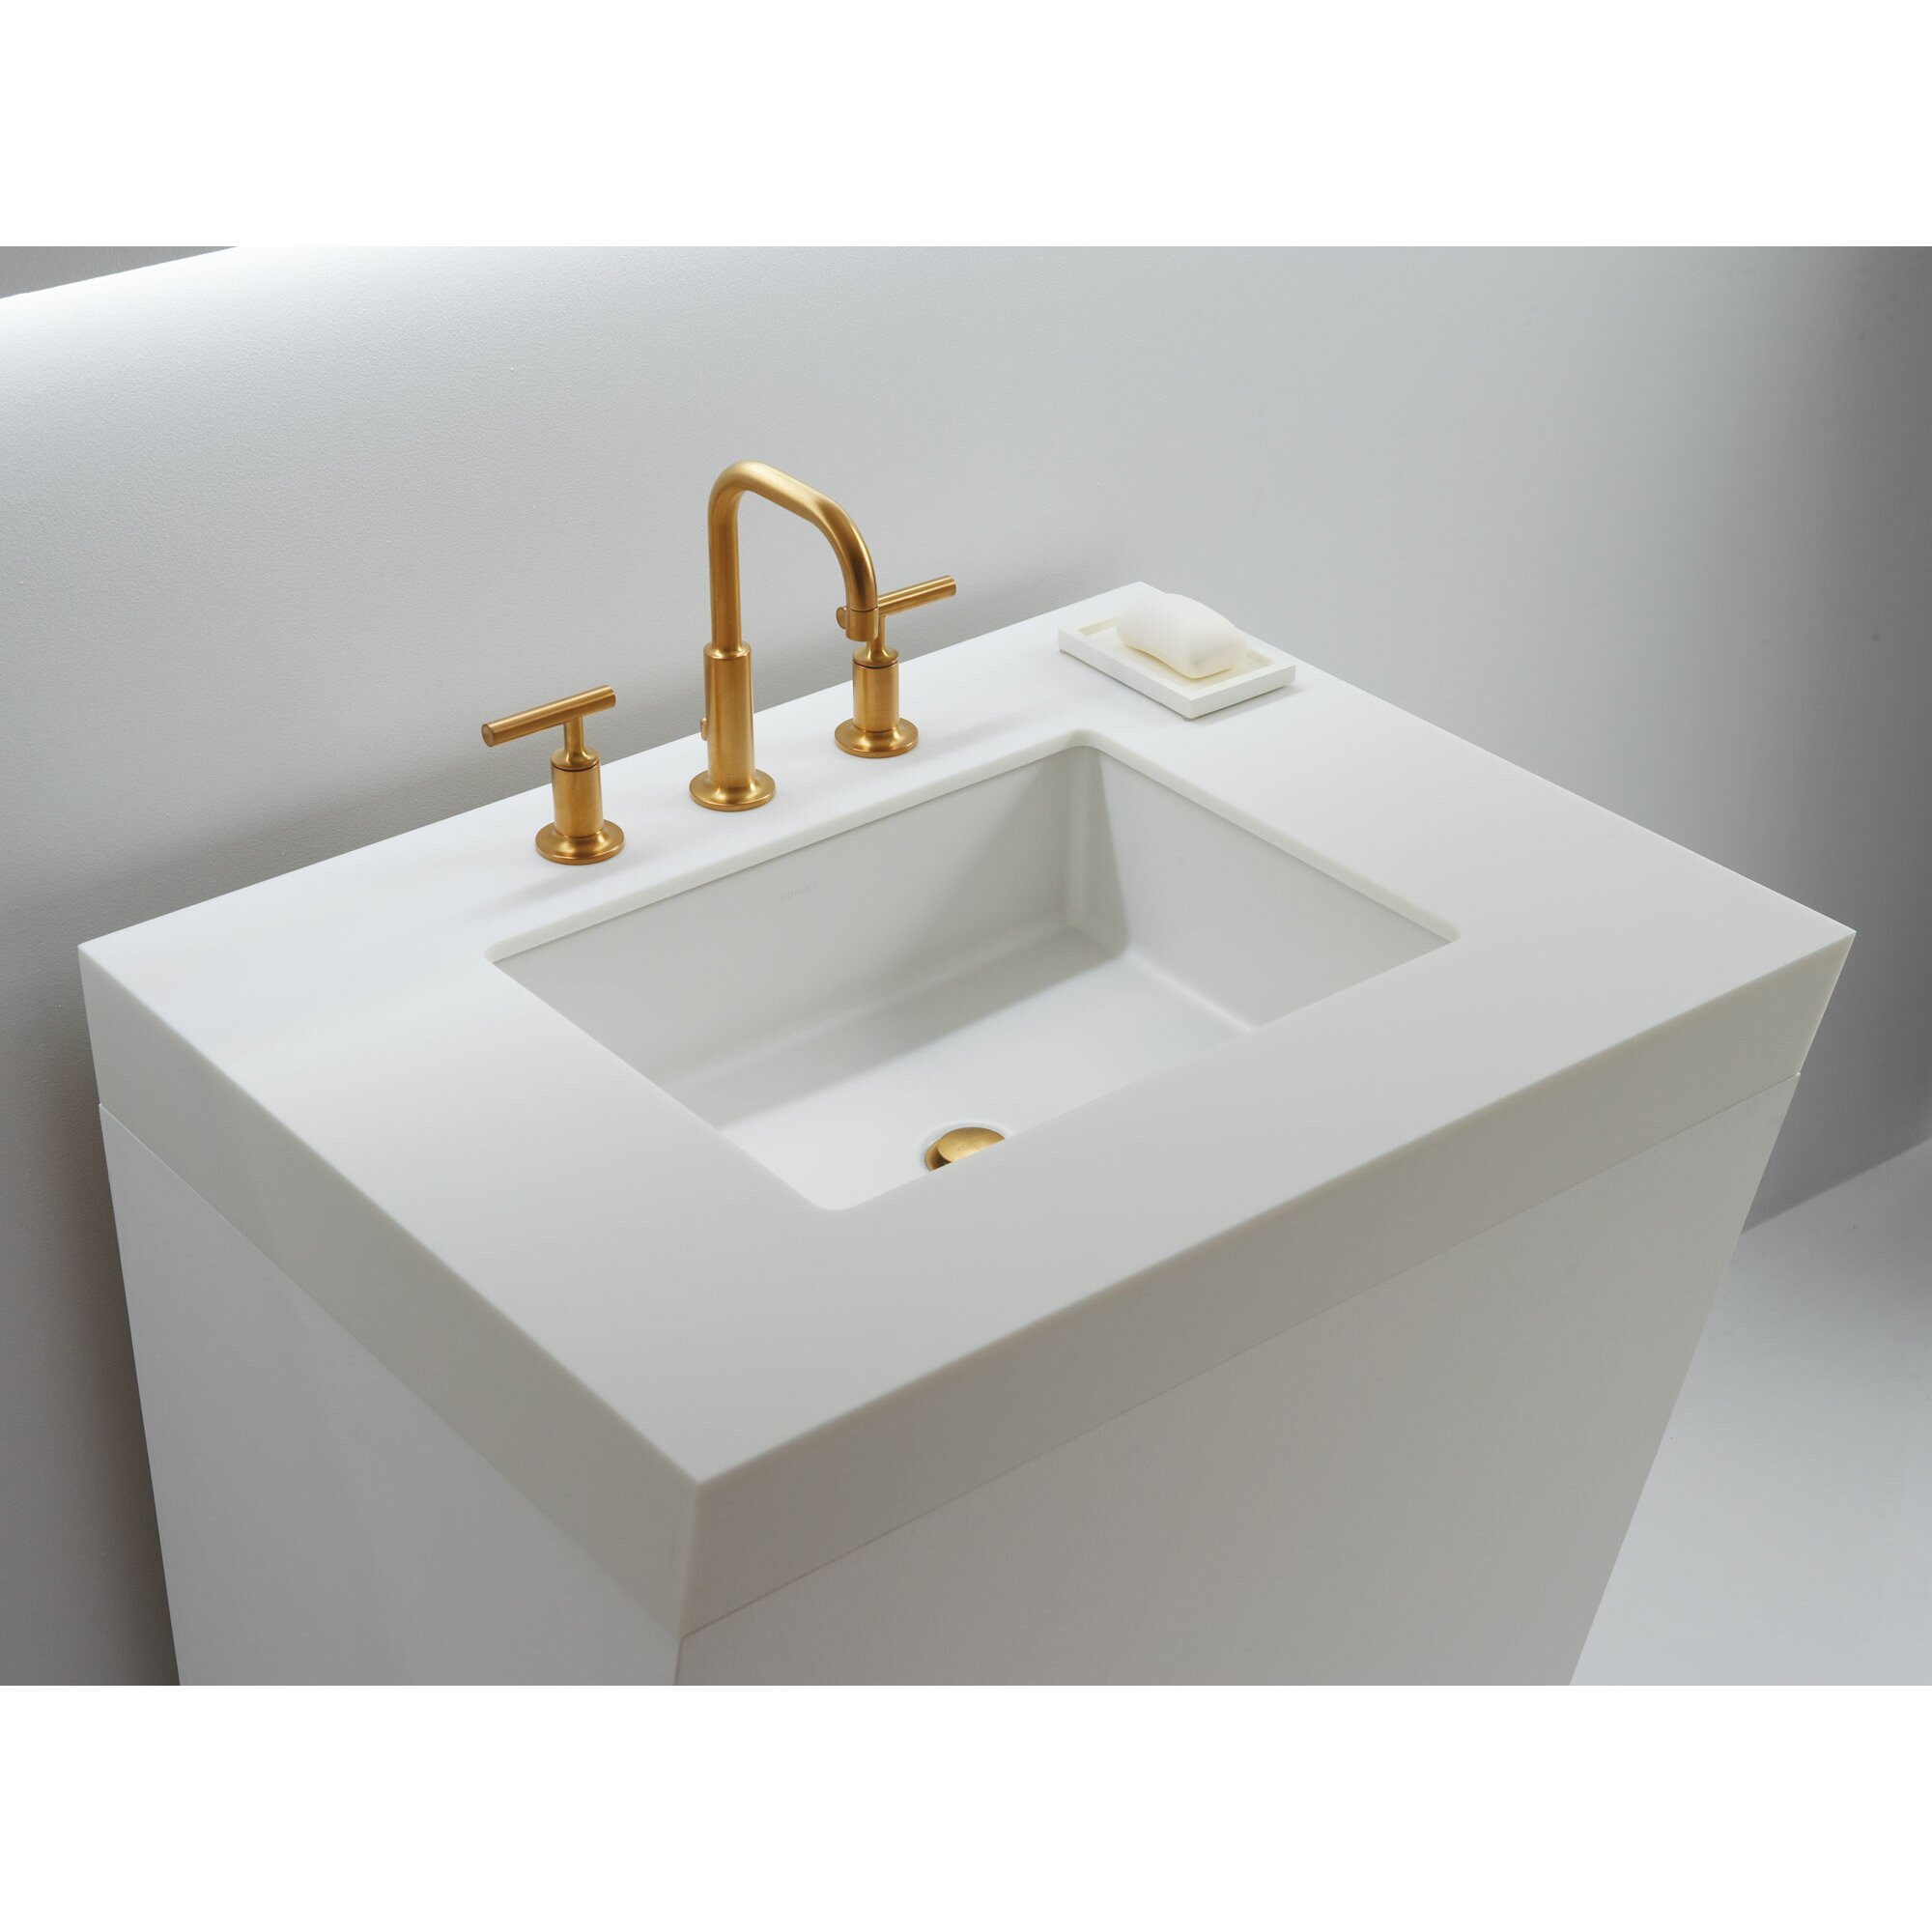 Rectangle Sink Bathroom
 Verticyl Rectangular Undermount Bathroom Sink with